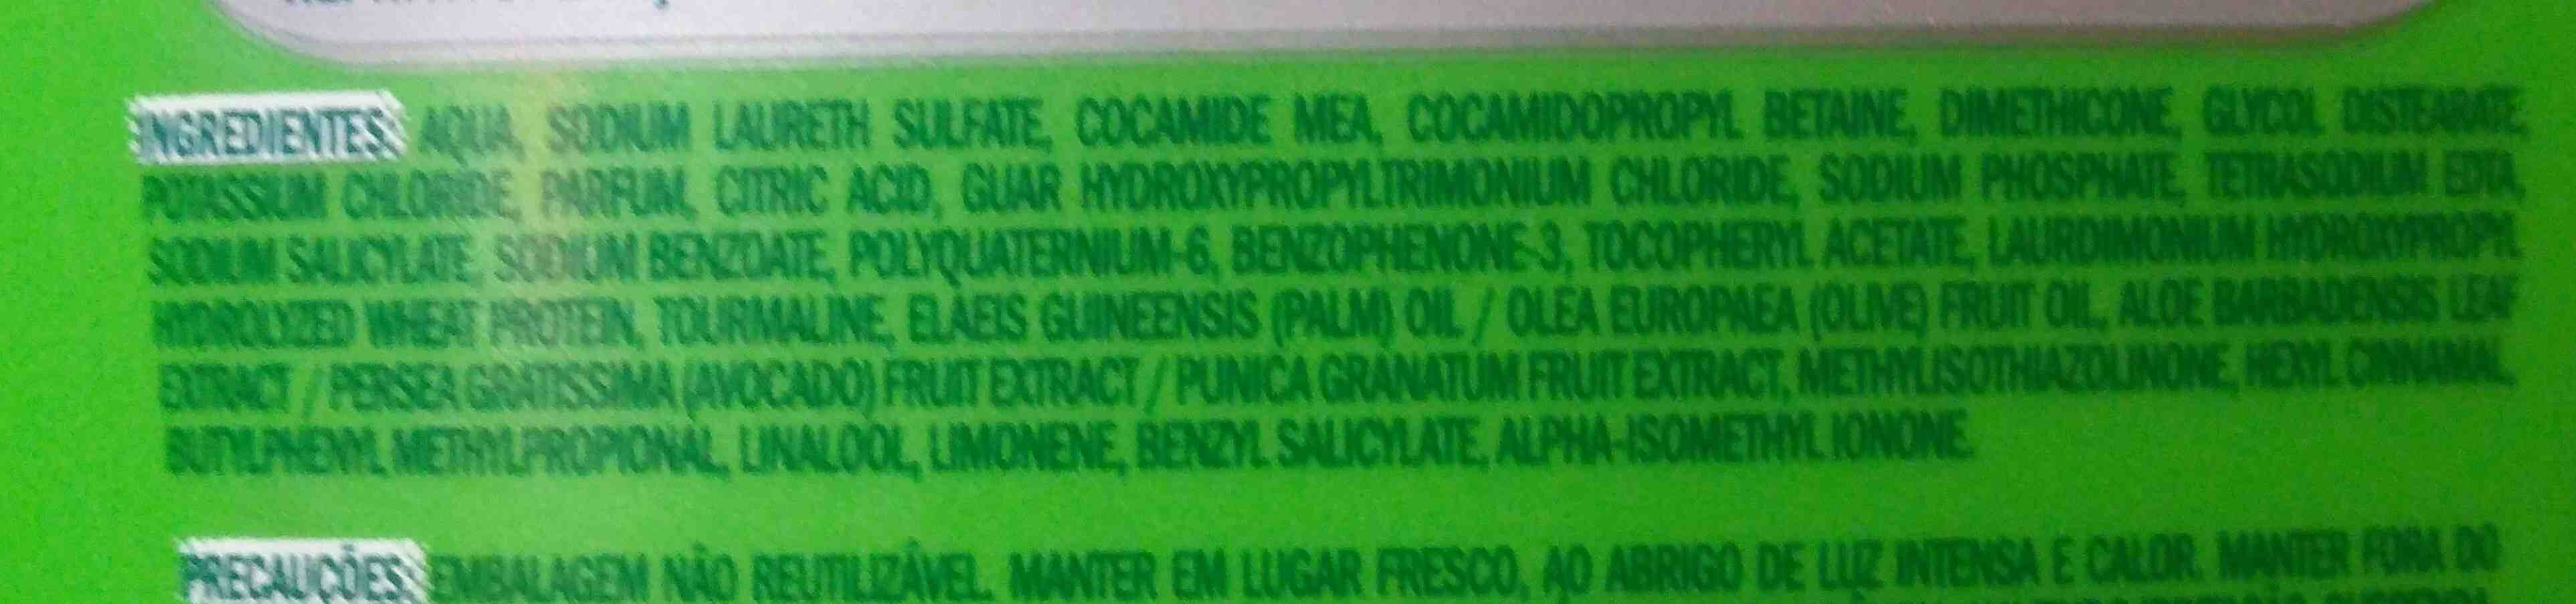 palmolive - Ингредиенты - en